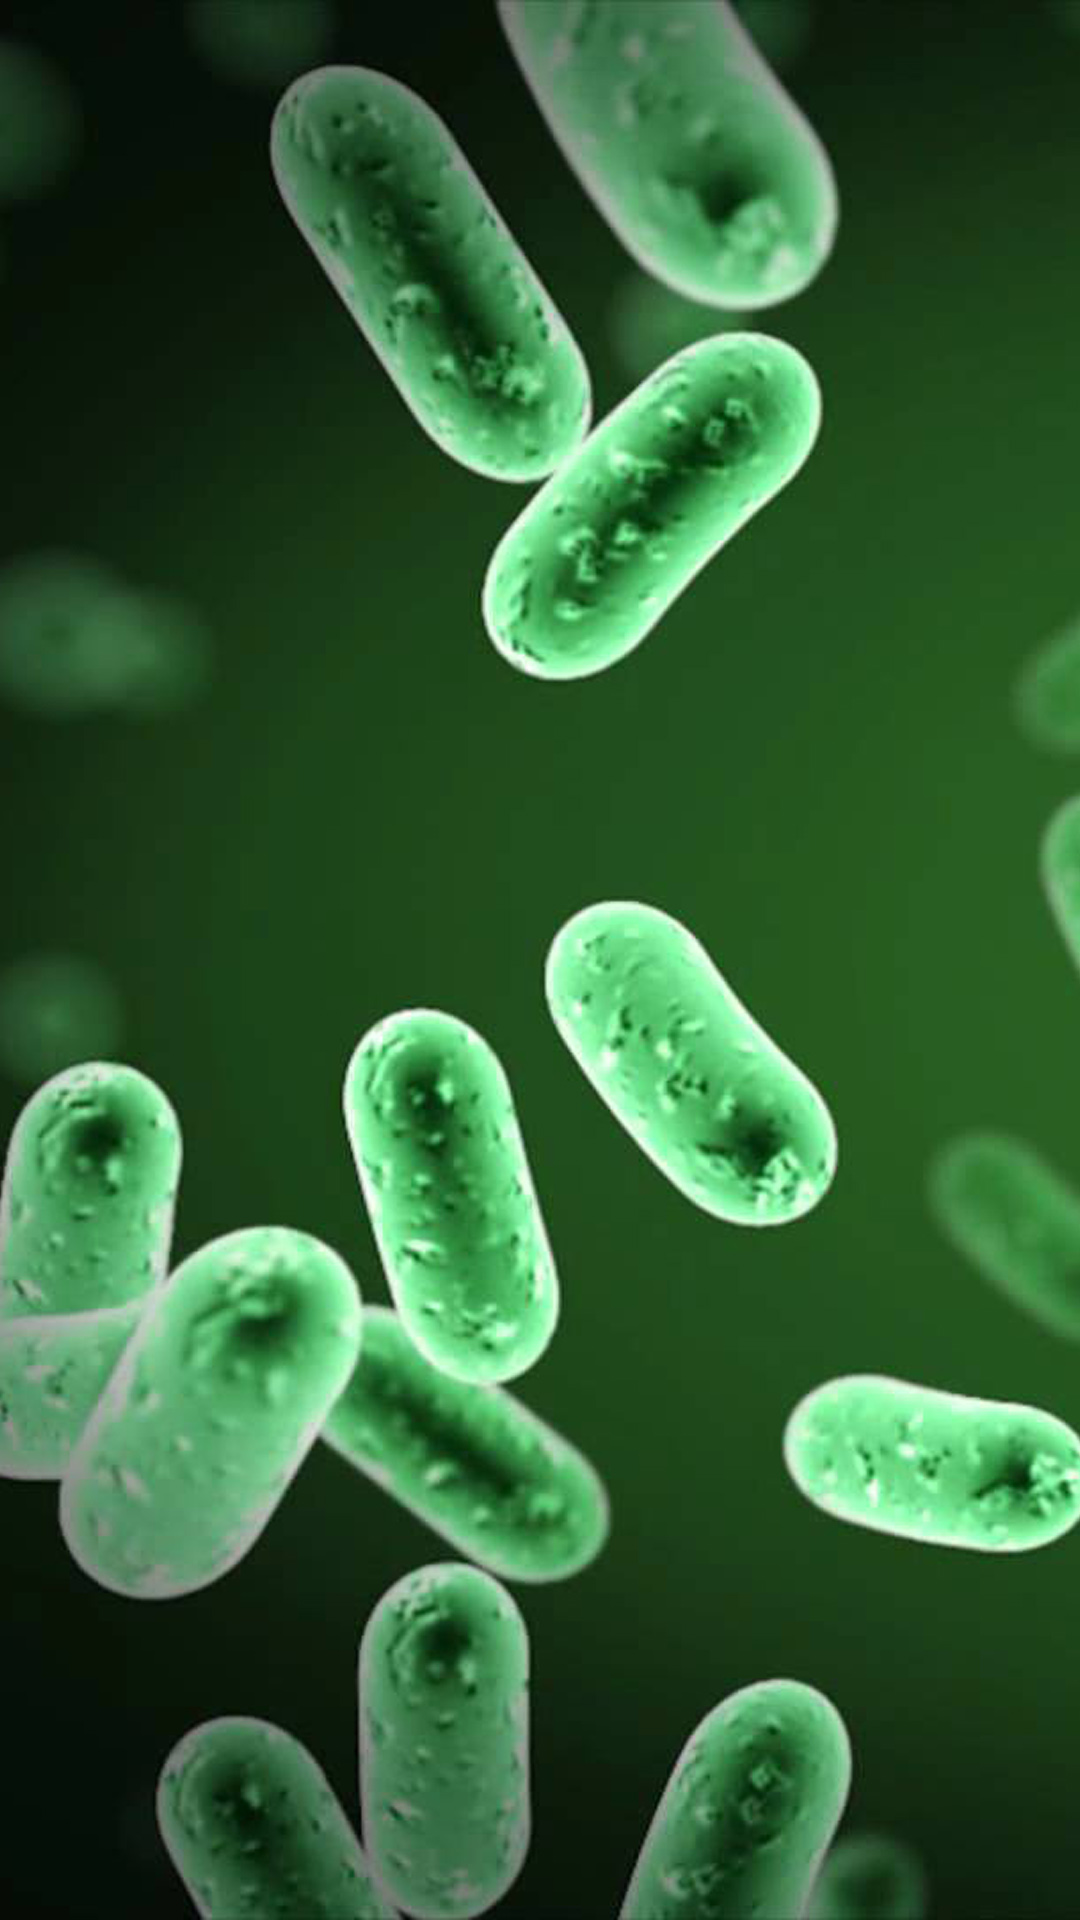 Wallpaper Bacteria Ameba Vector Images 44